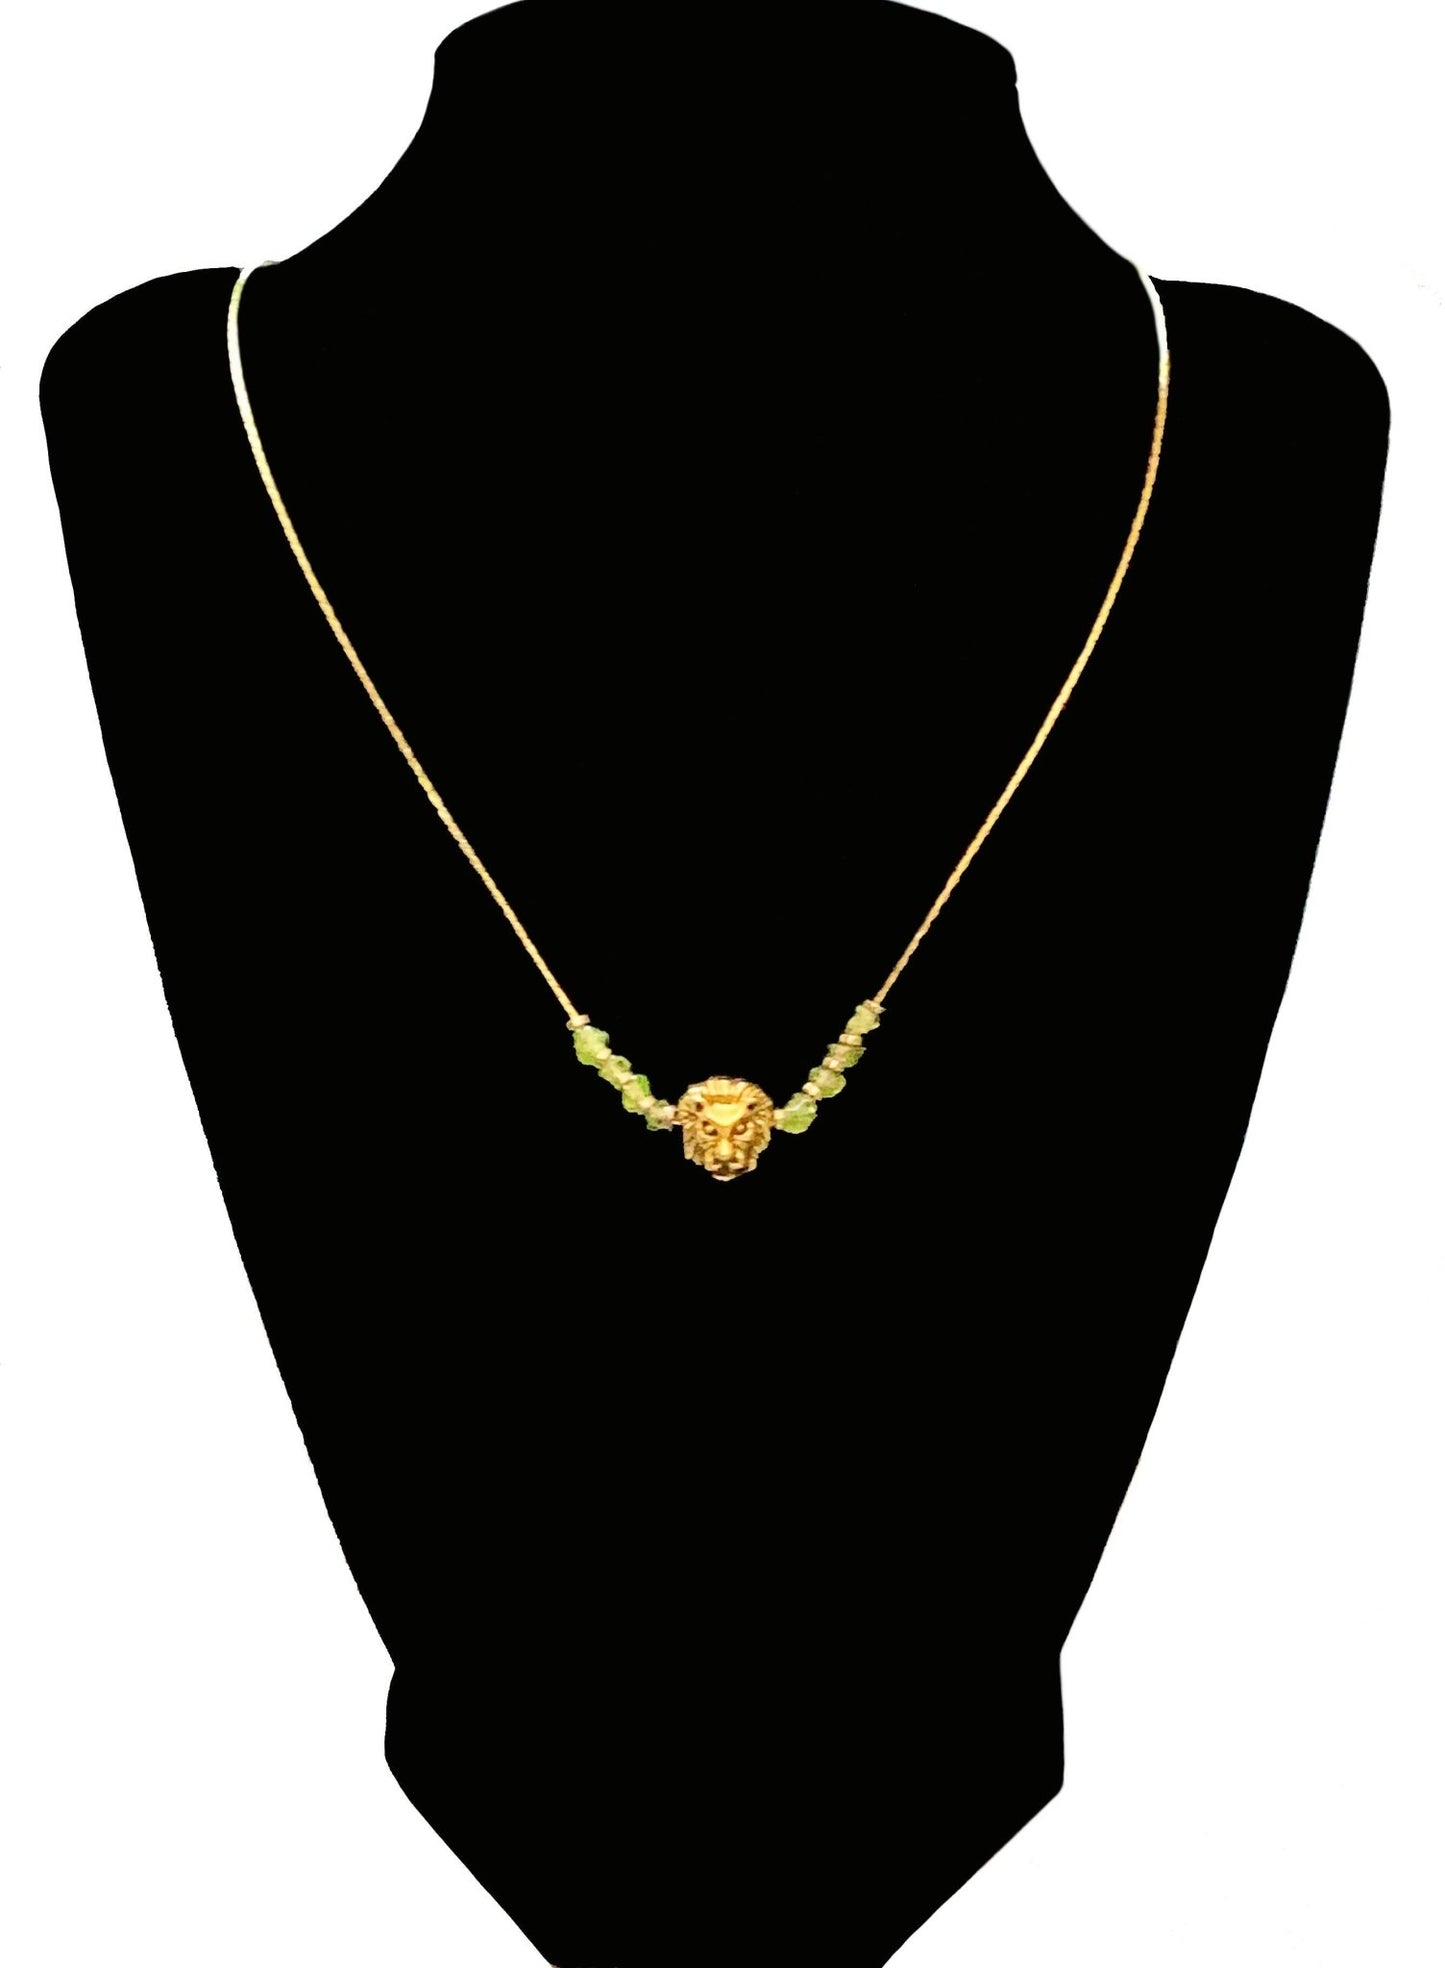 Ari Handmade Peridot and Lion Pendant Necklace - Born Mystics